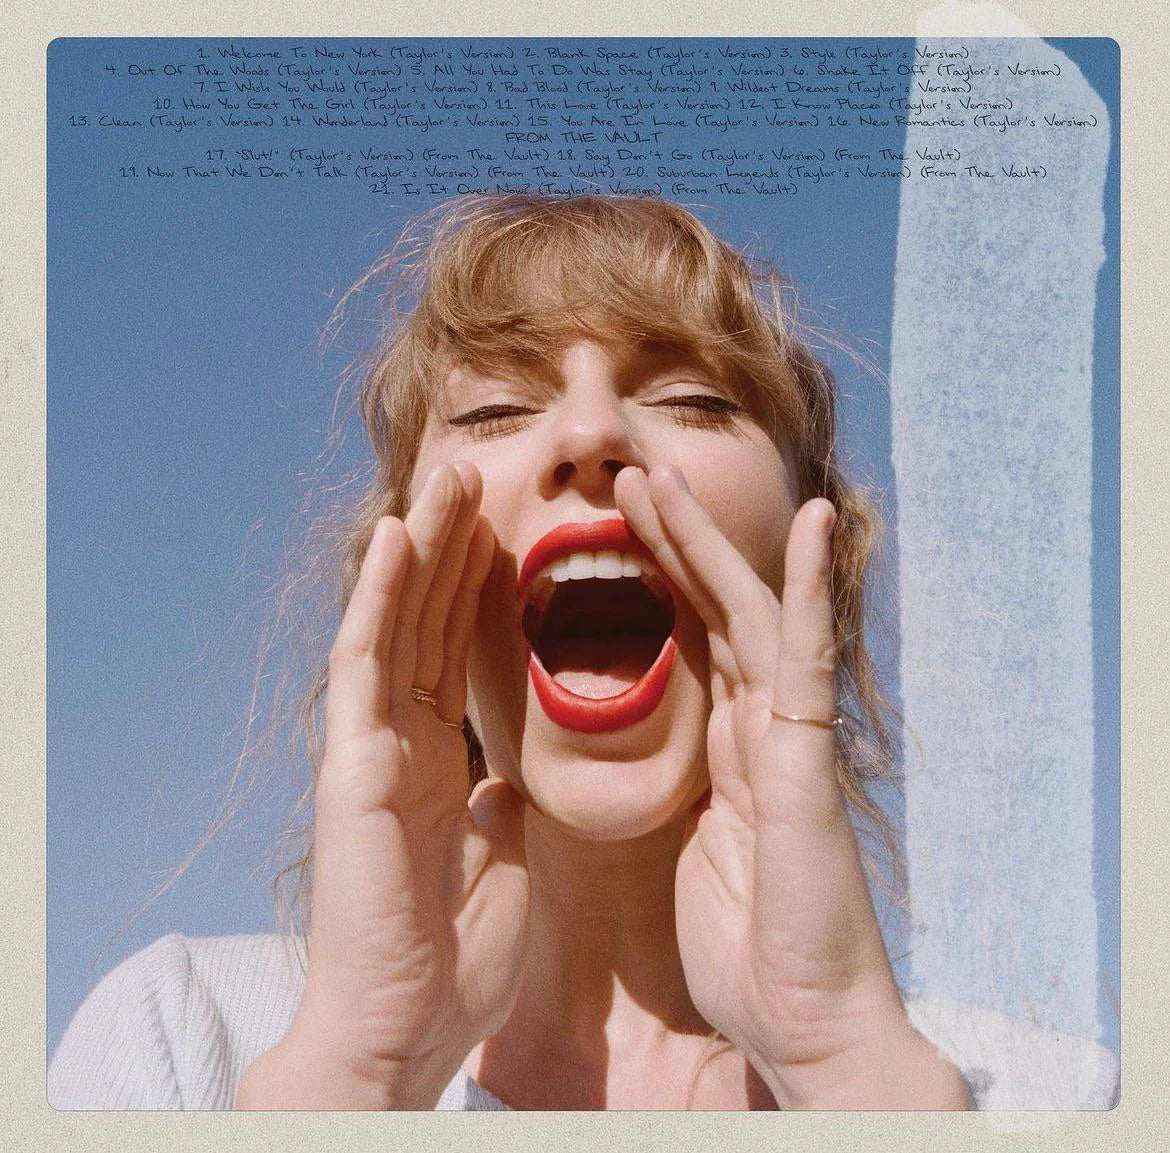 Taylor Swift - Taylor Swift - Vinyl 